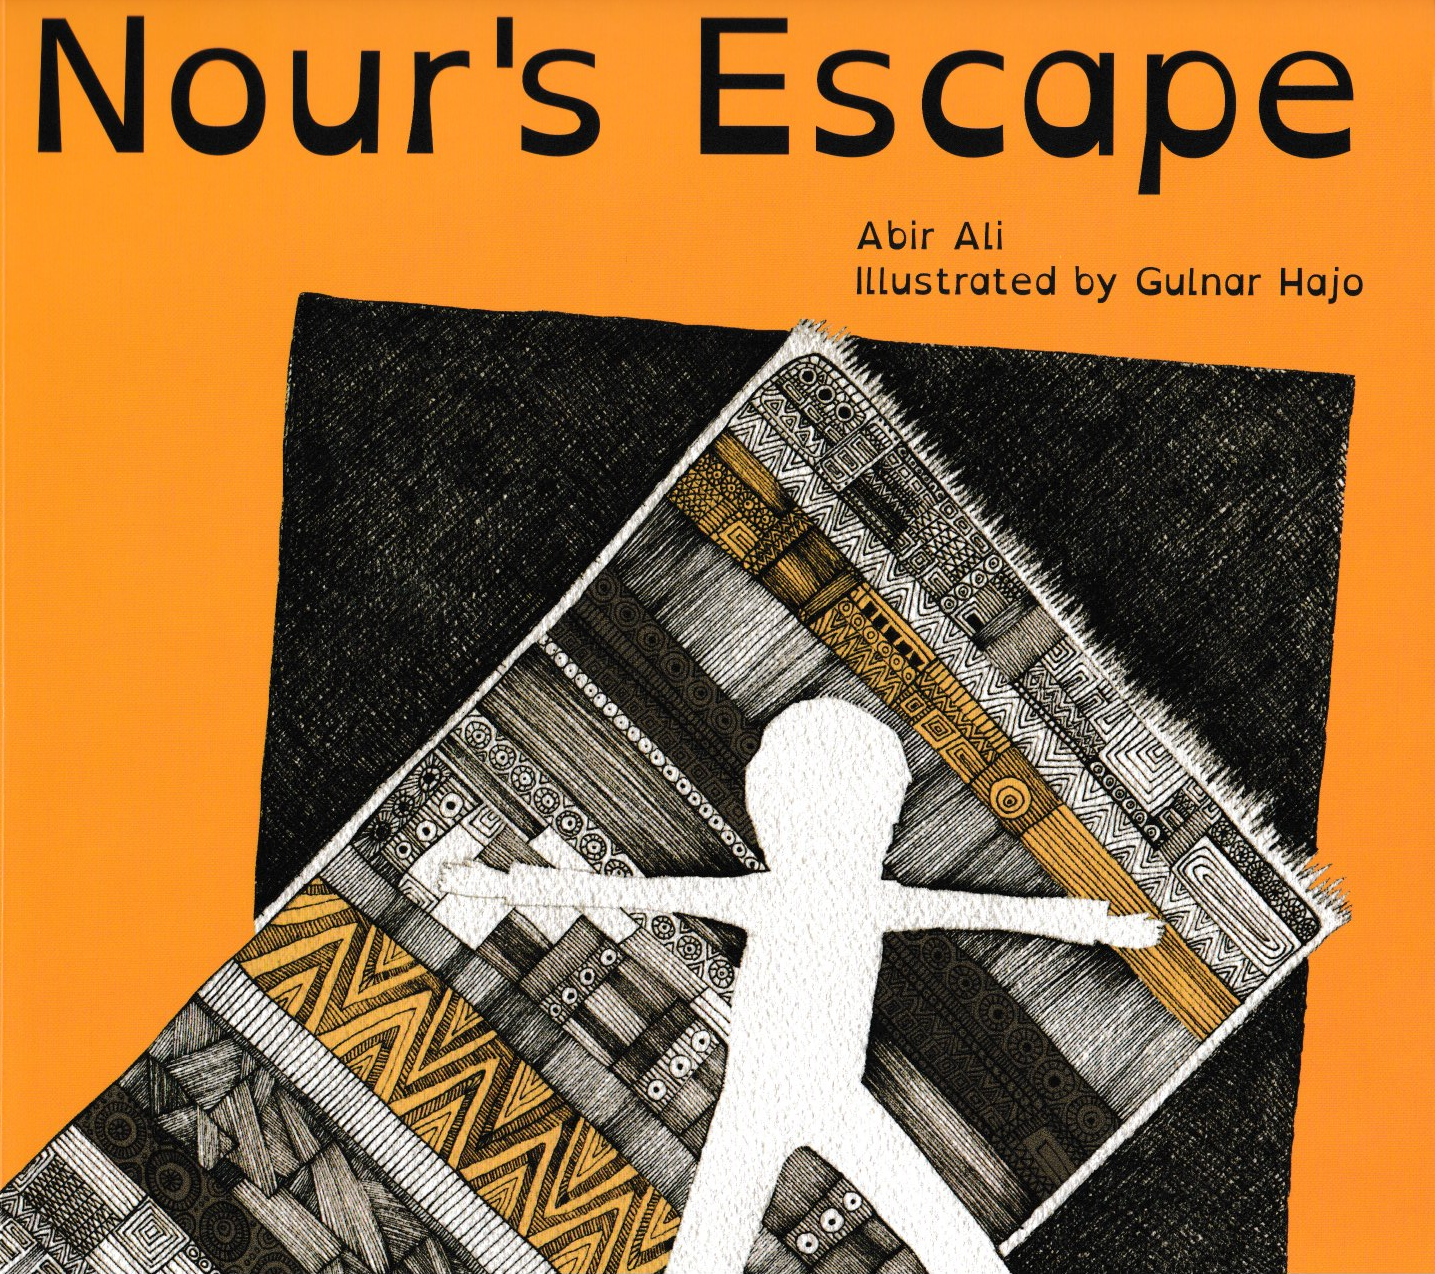 Nour's Escape - by Abir Ali & Gulnar Hajo - translated by Ruth Ahmedzai Kemp